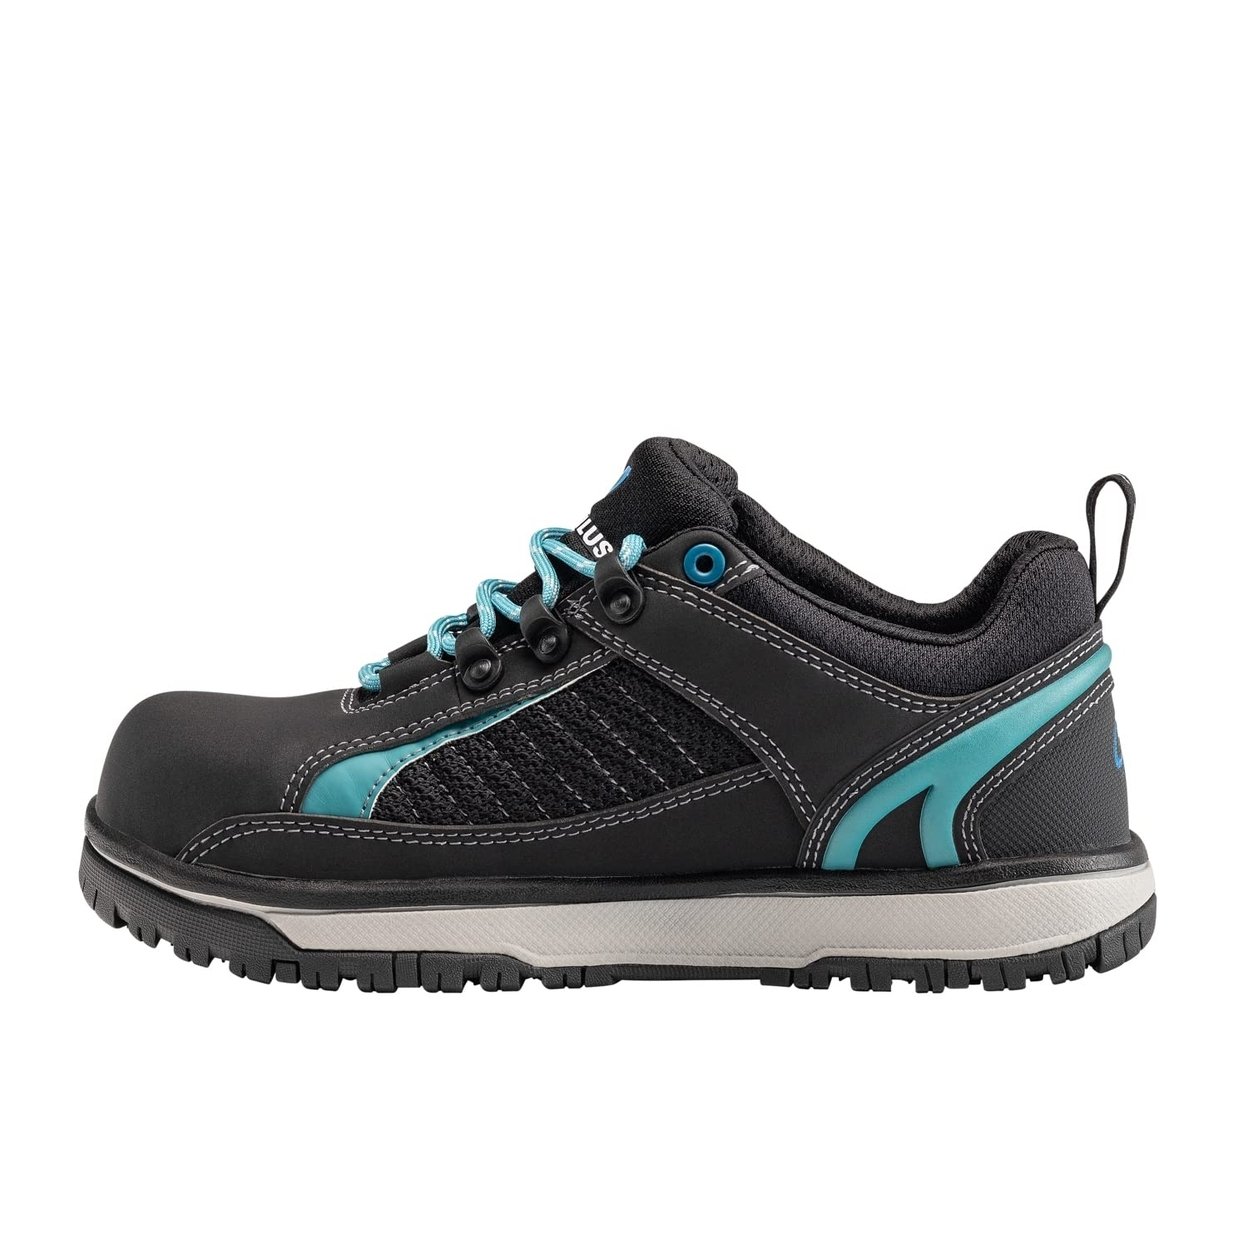 FSI FOOTWEAR SPECIALTIES INTERNATIONAL NAUTILUS Nautilus Women's Alloy Toe EH Athletic Work Shoe Black/Blue - N1466 BLACK &BLUE - Multicolor